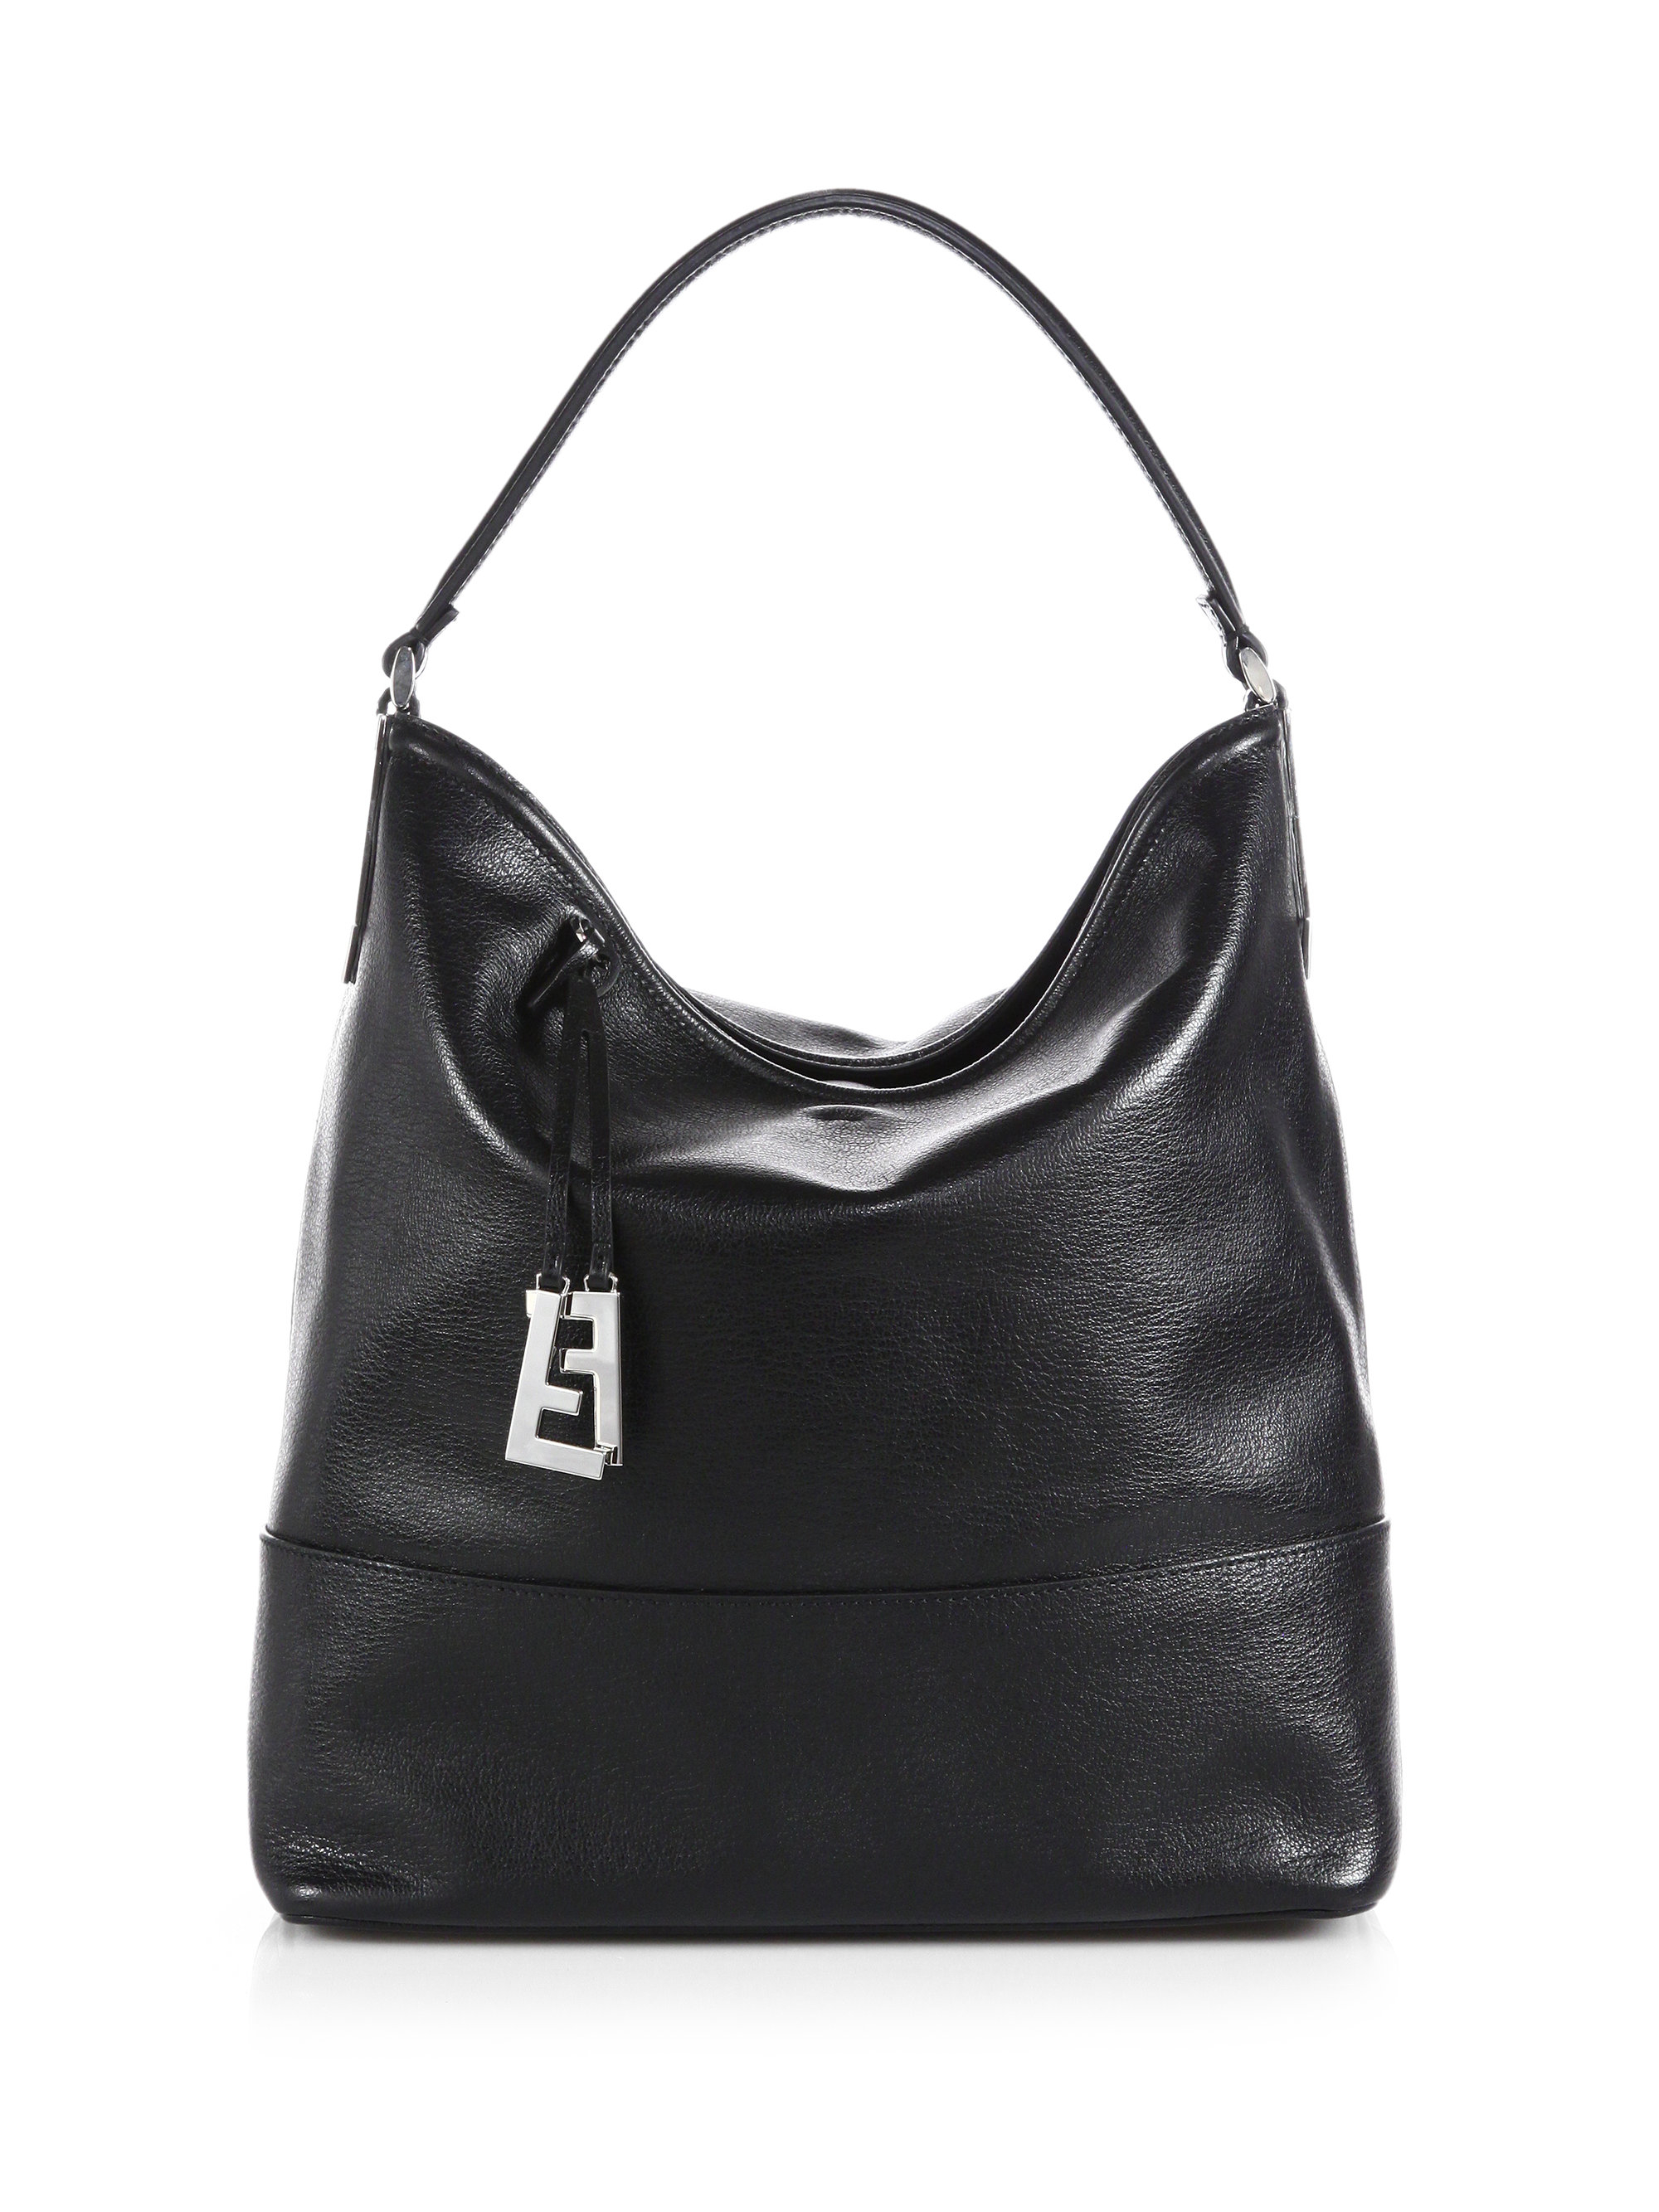 Fendi Large Bucket Bag with Ff Charm in Black | Lyst